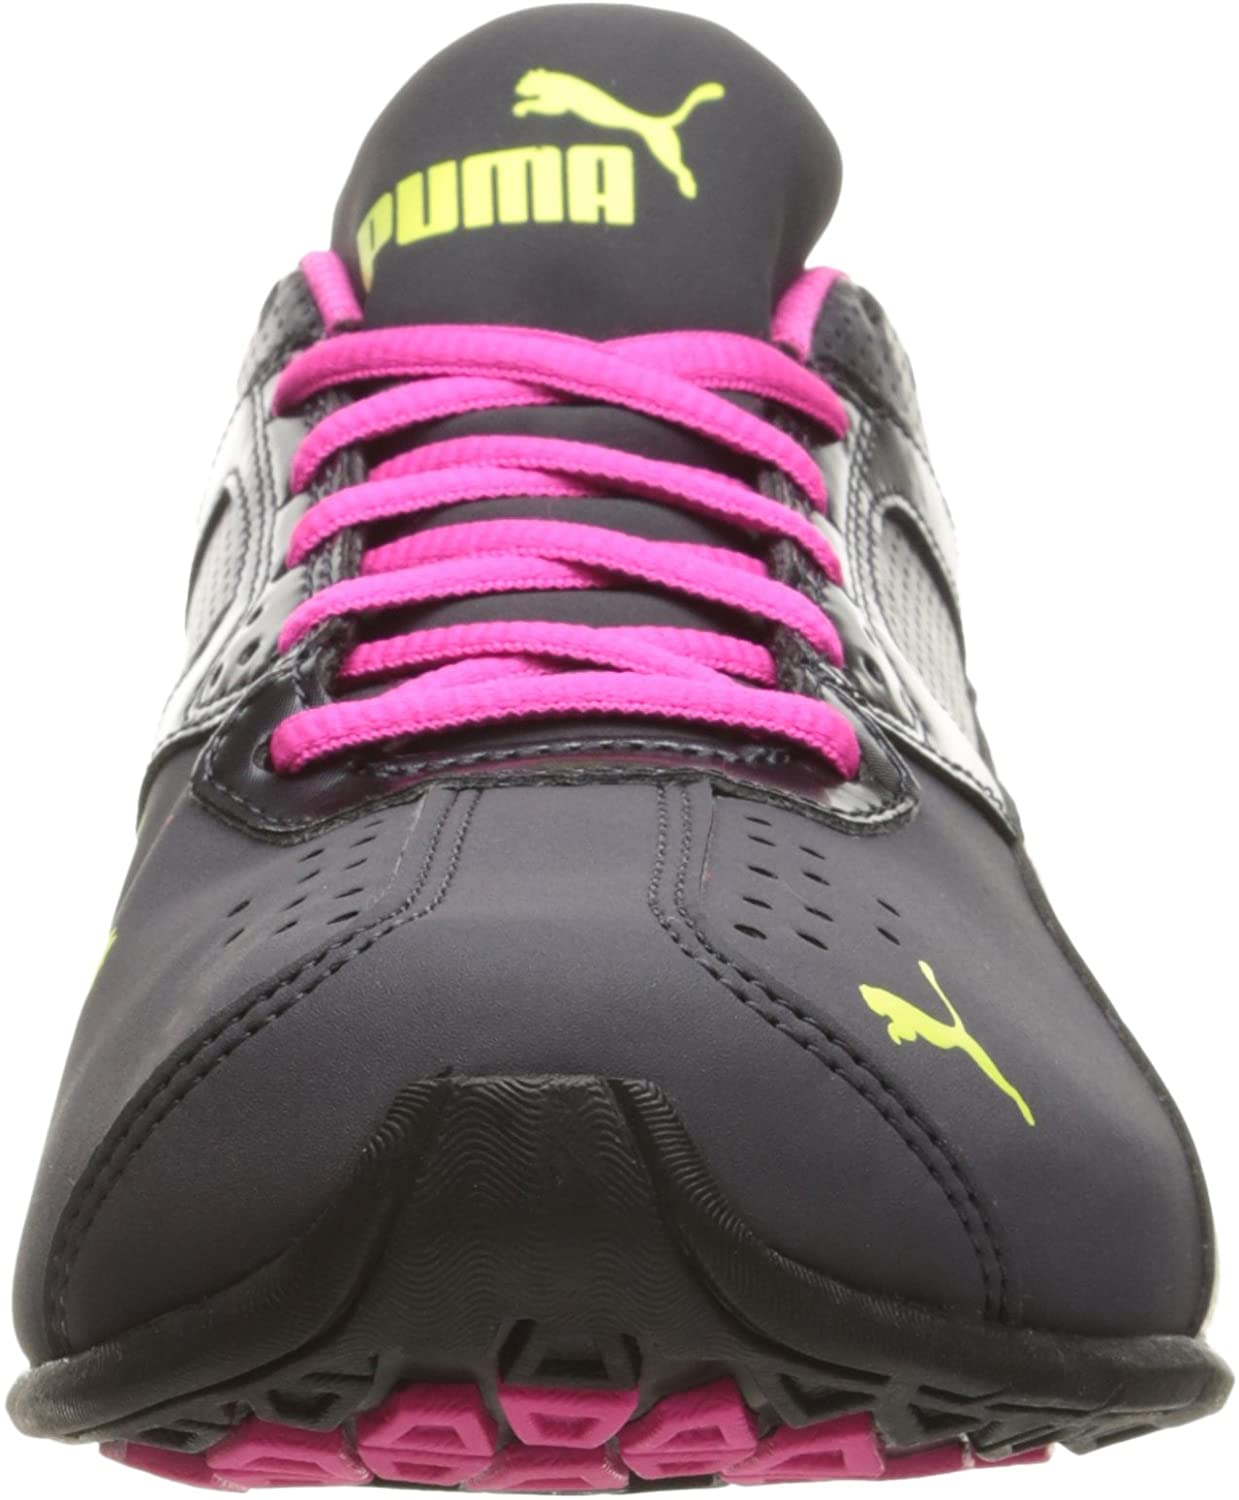 PUMA Tazon 6 Fracture Mens Sneaker FM Shoes - image 2 of 8